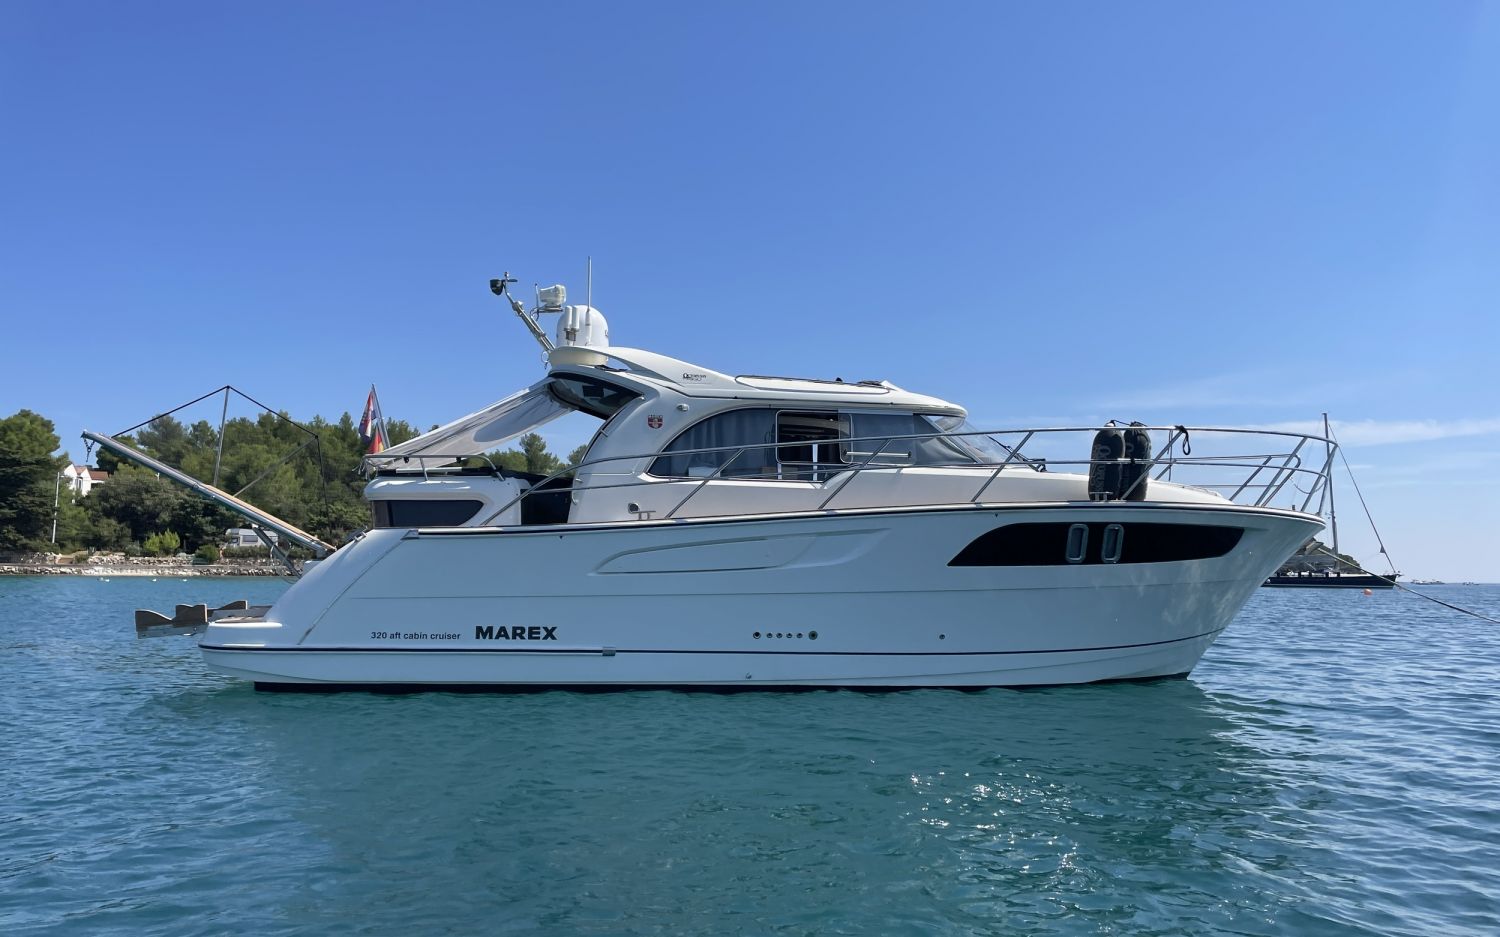 Marex 320 ACC, Motoryacht for sale by HollandBoat International Yachtbrokers